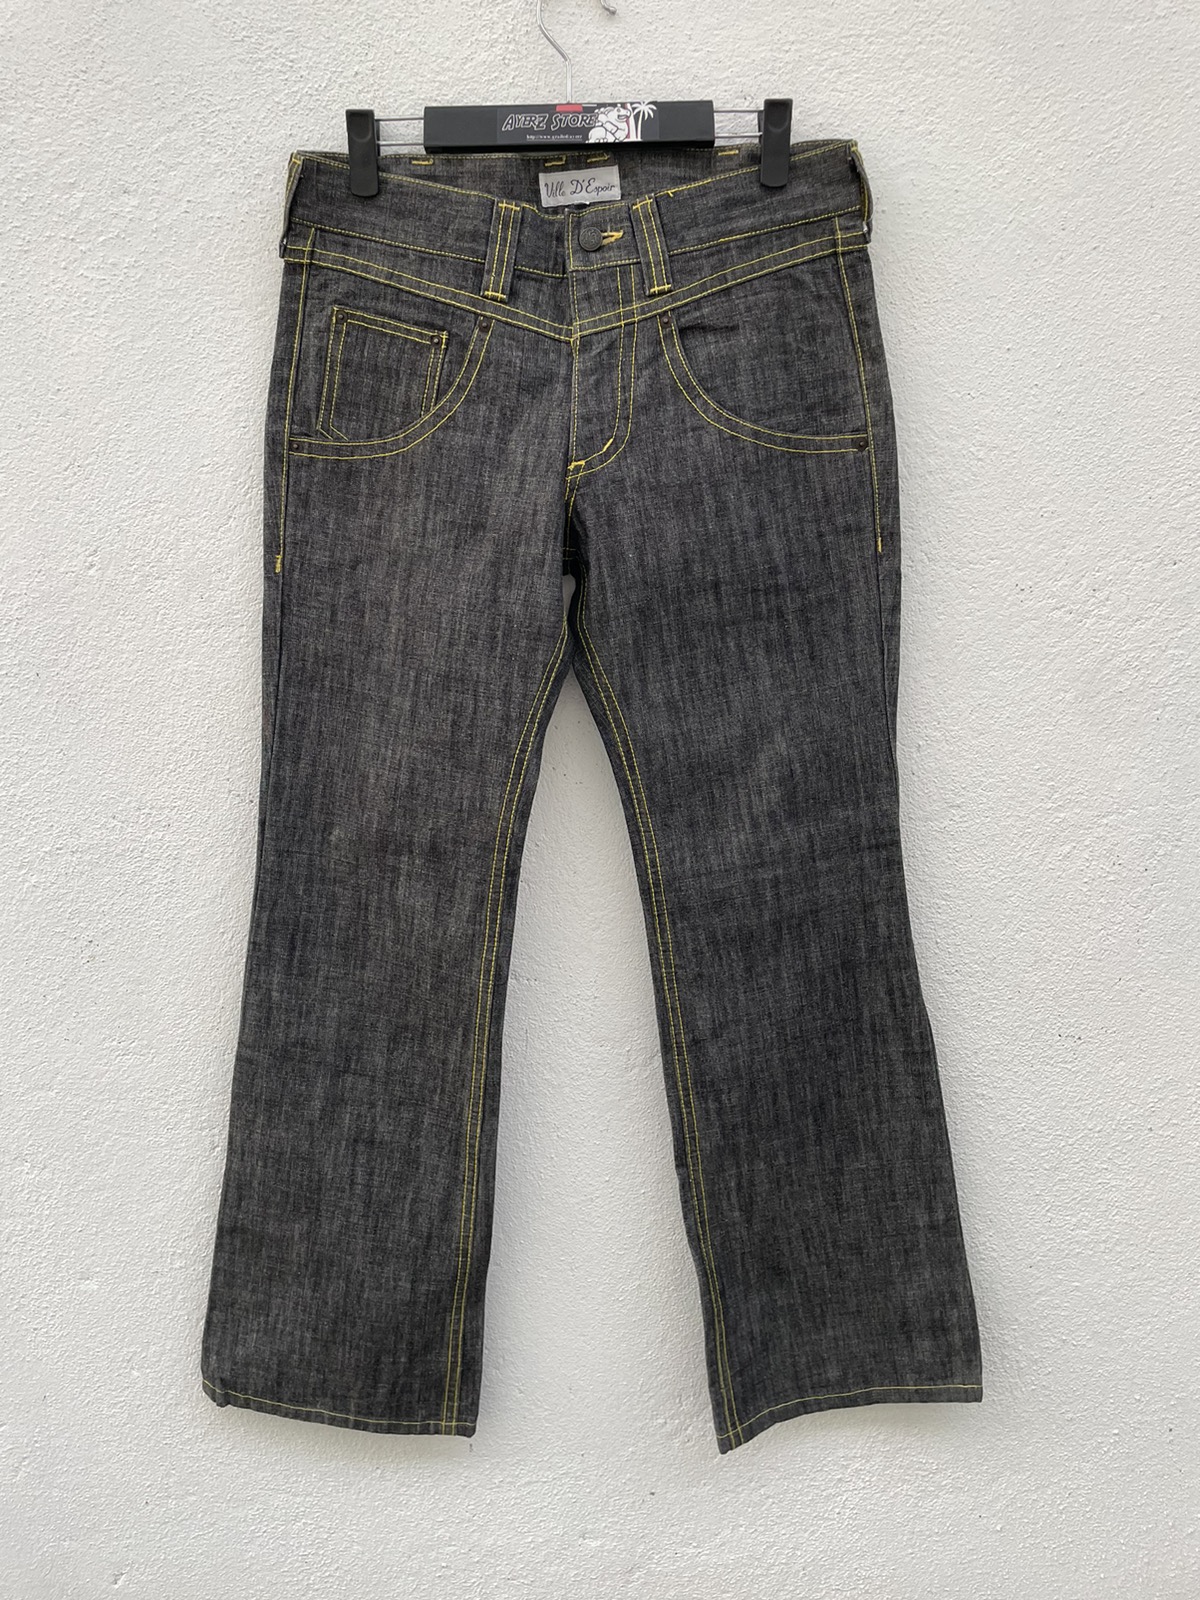 Flare Jeans Ville D’Espoir denim Jeans Made in Japan - 1